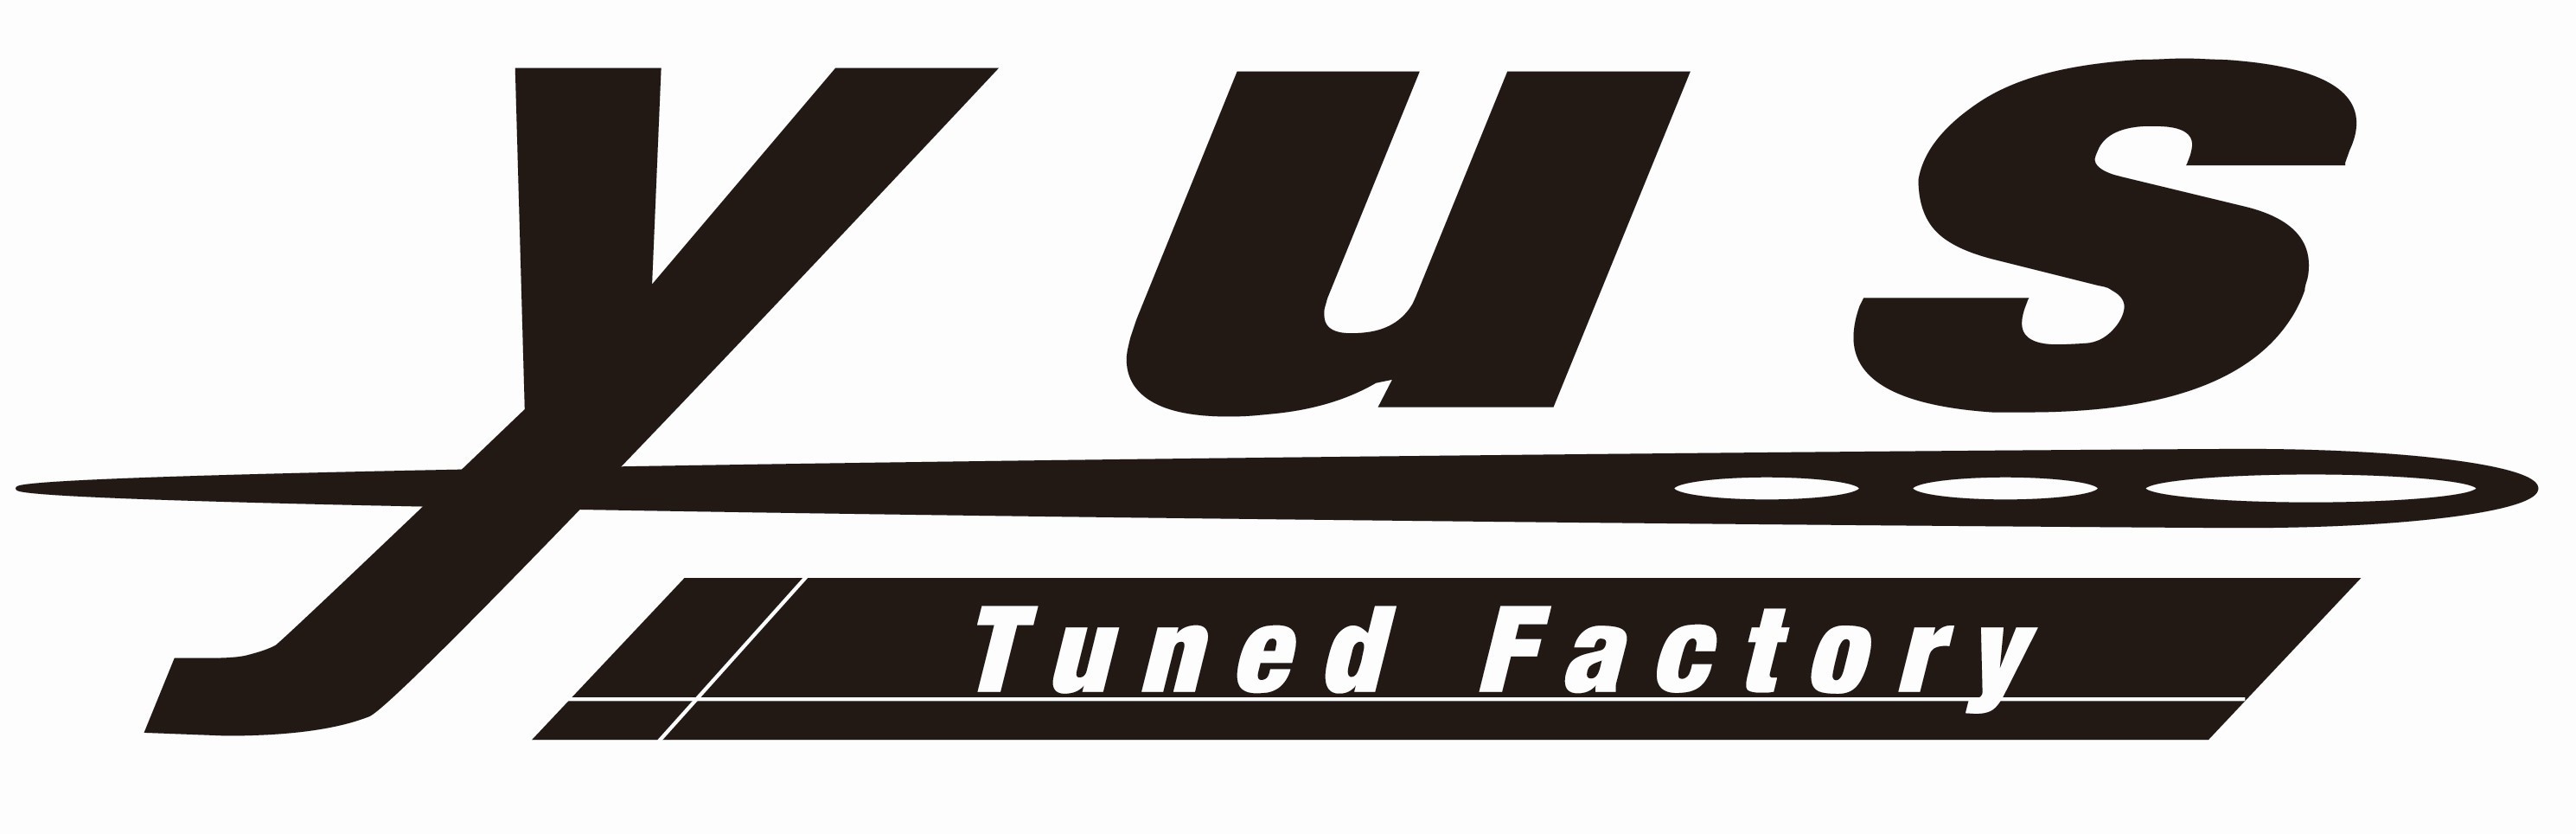 yus tuned factory